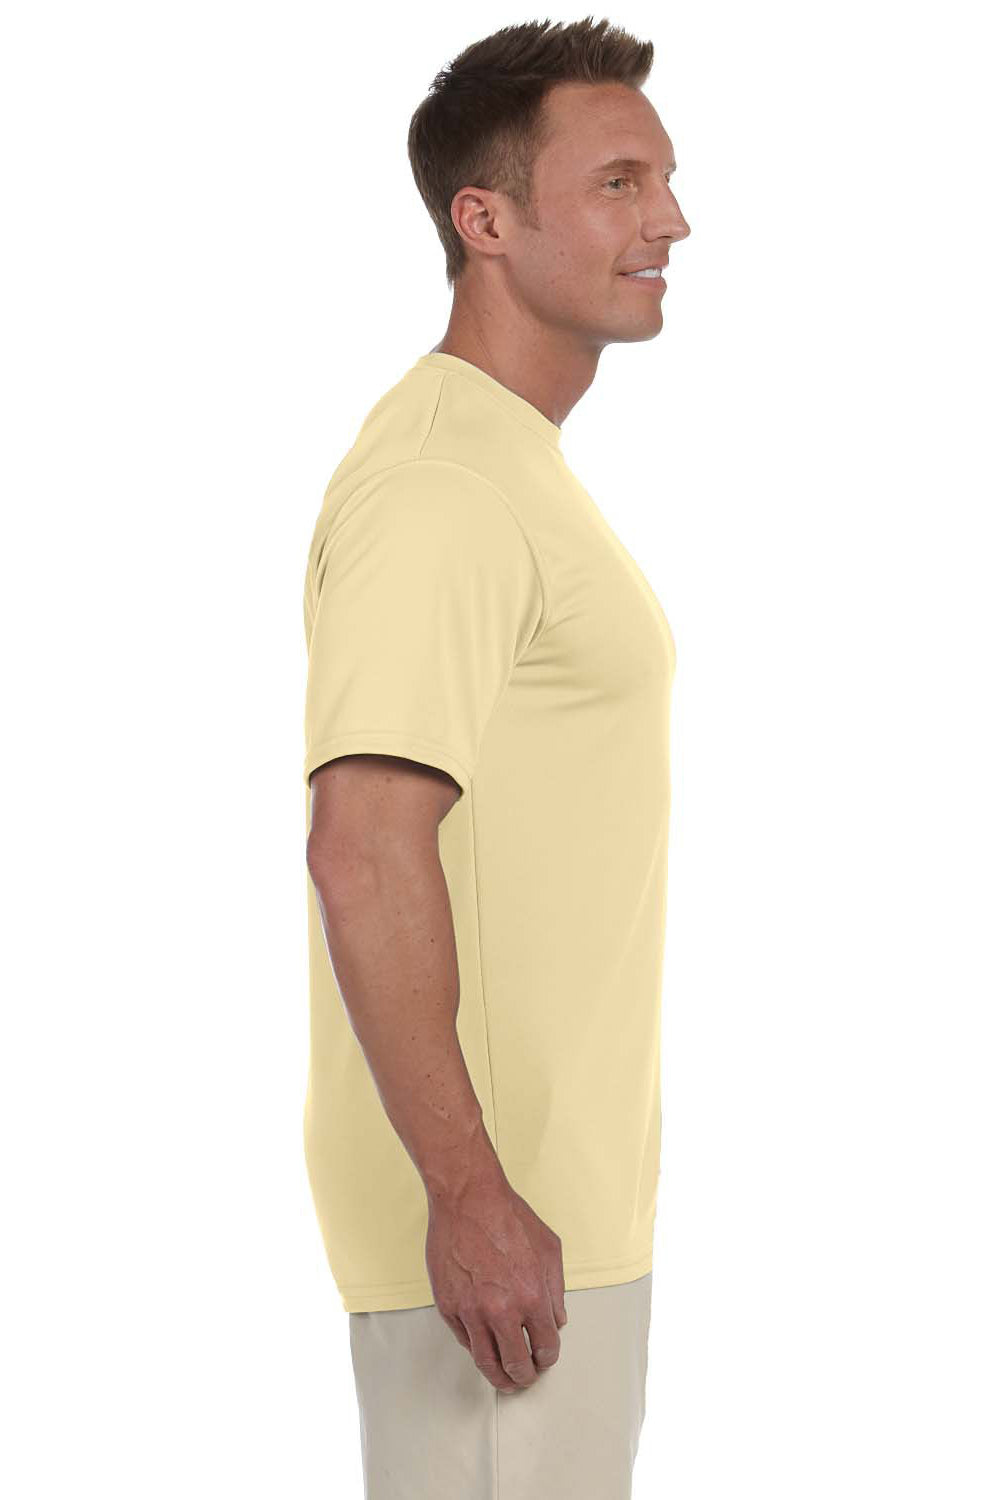 Augusta Sportswear 790 Mens Moisture Wicking Short Sleeve Crewneck T-Shirt Vegas Gold Model Side